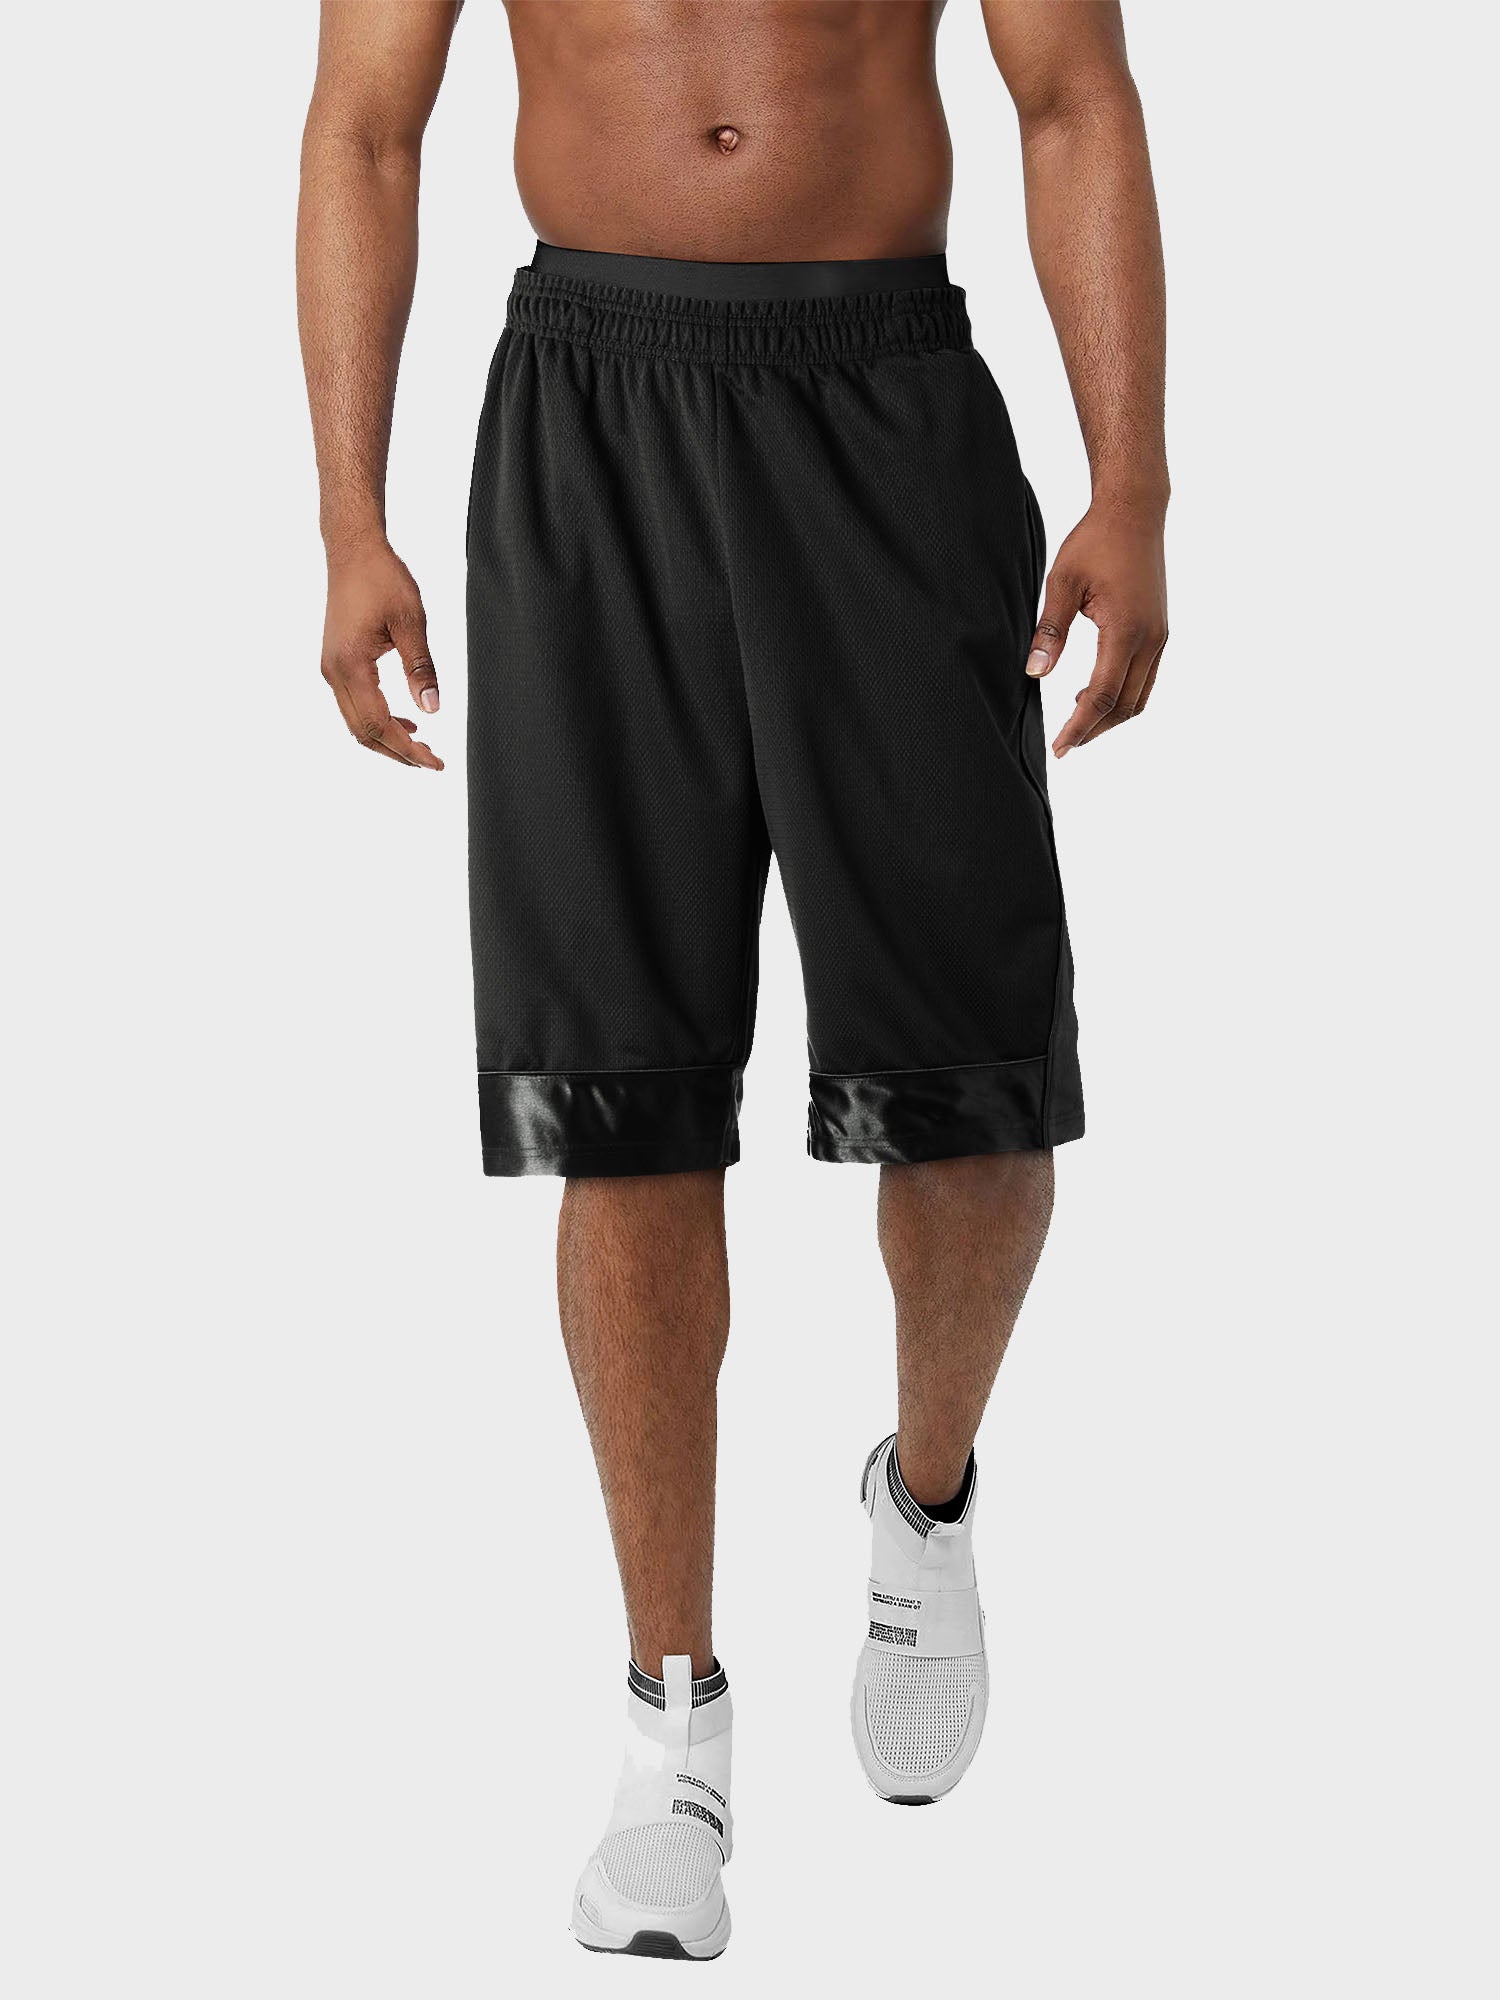 Mens Heavyweight Mesh Shorts with Pockets Basketball Gym Workout Short